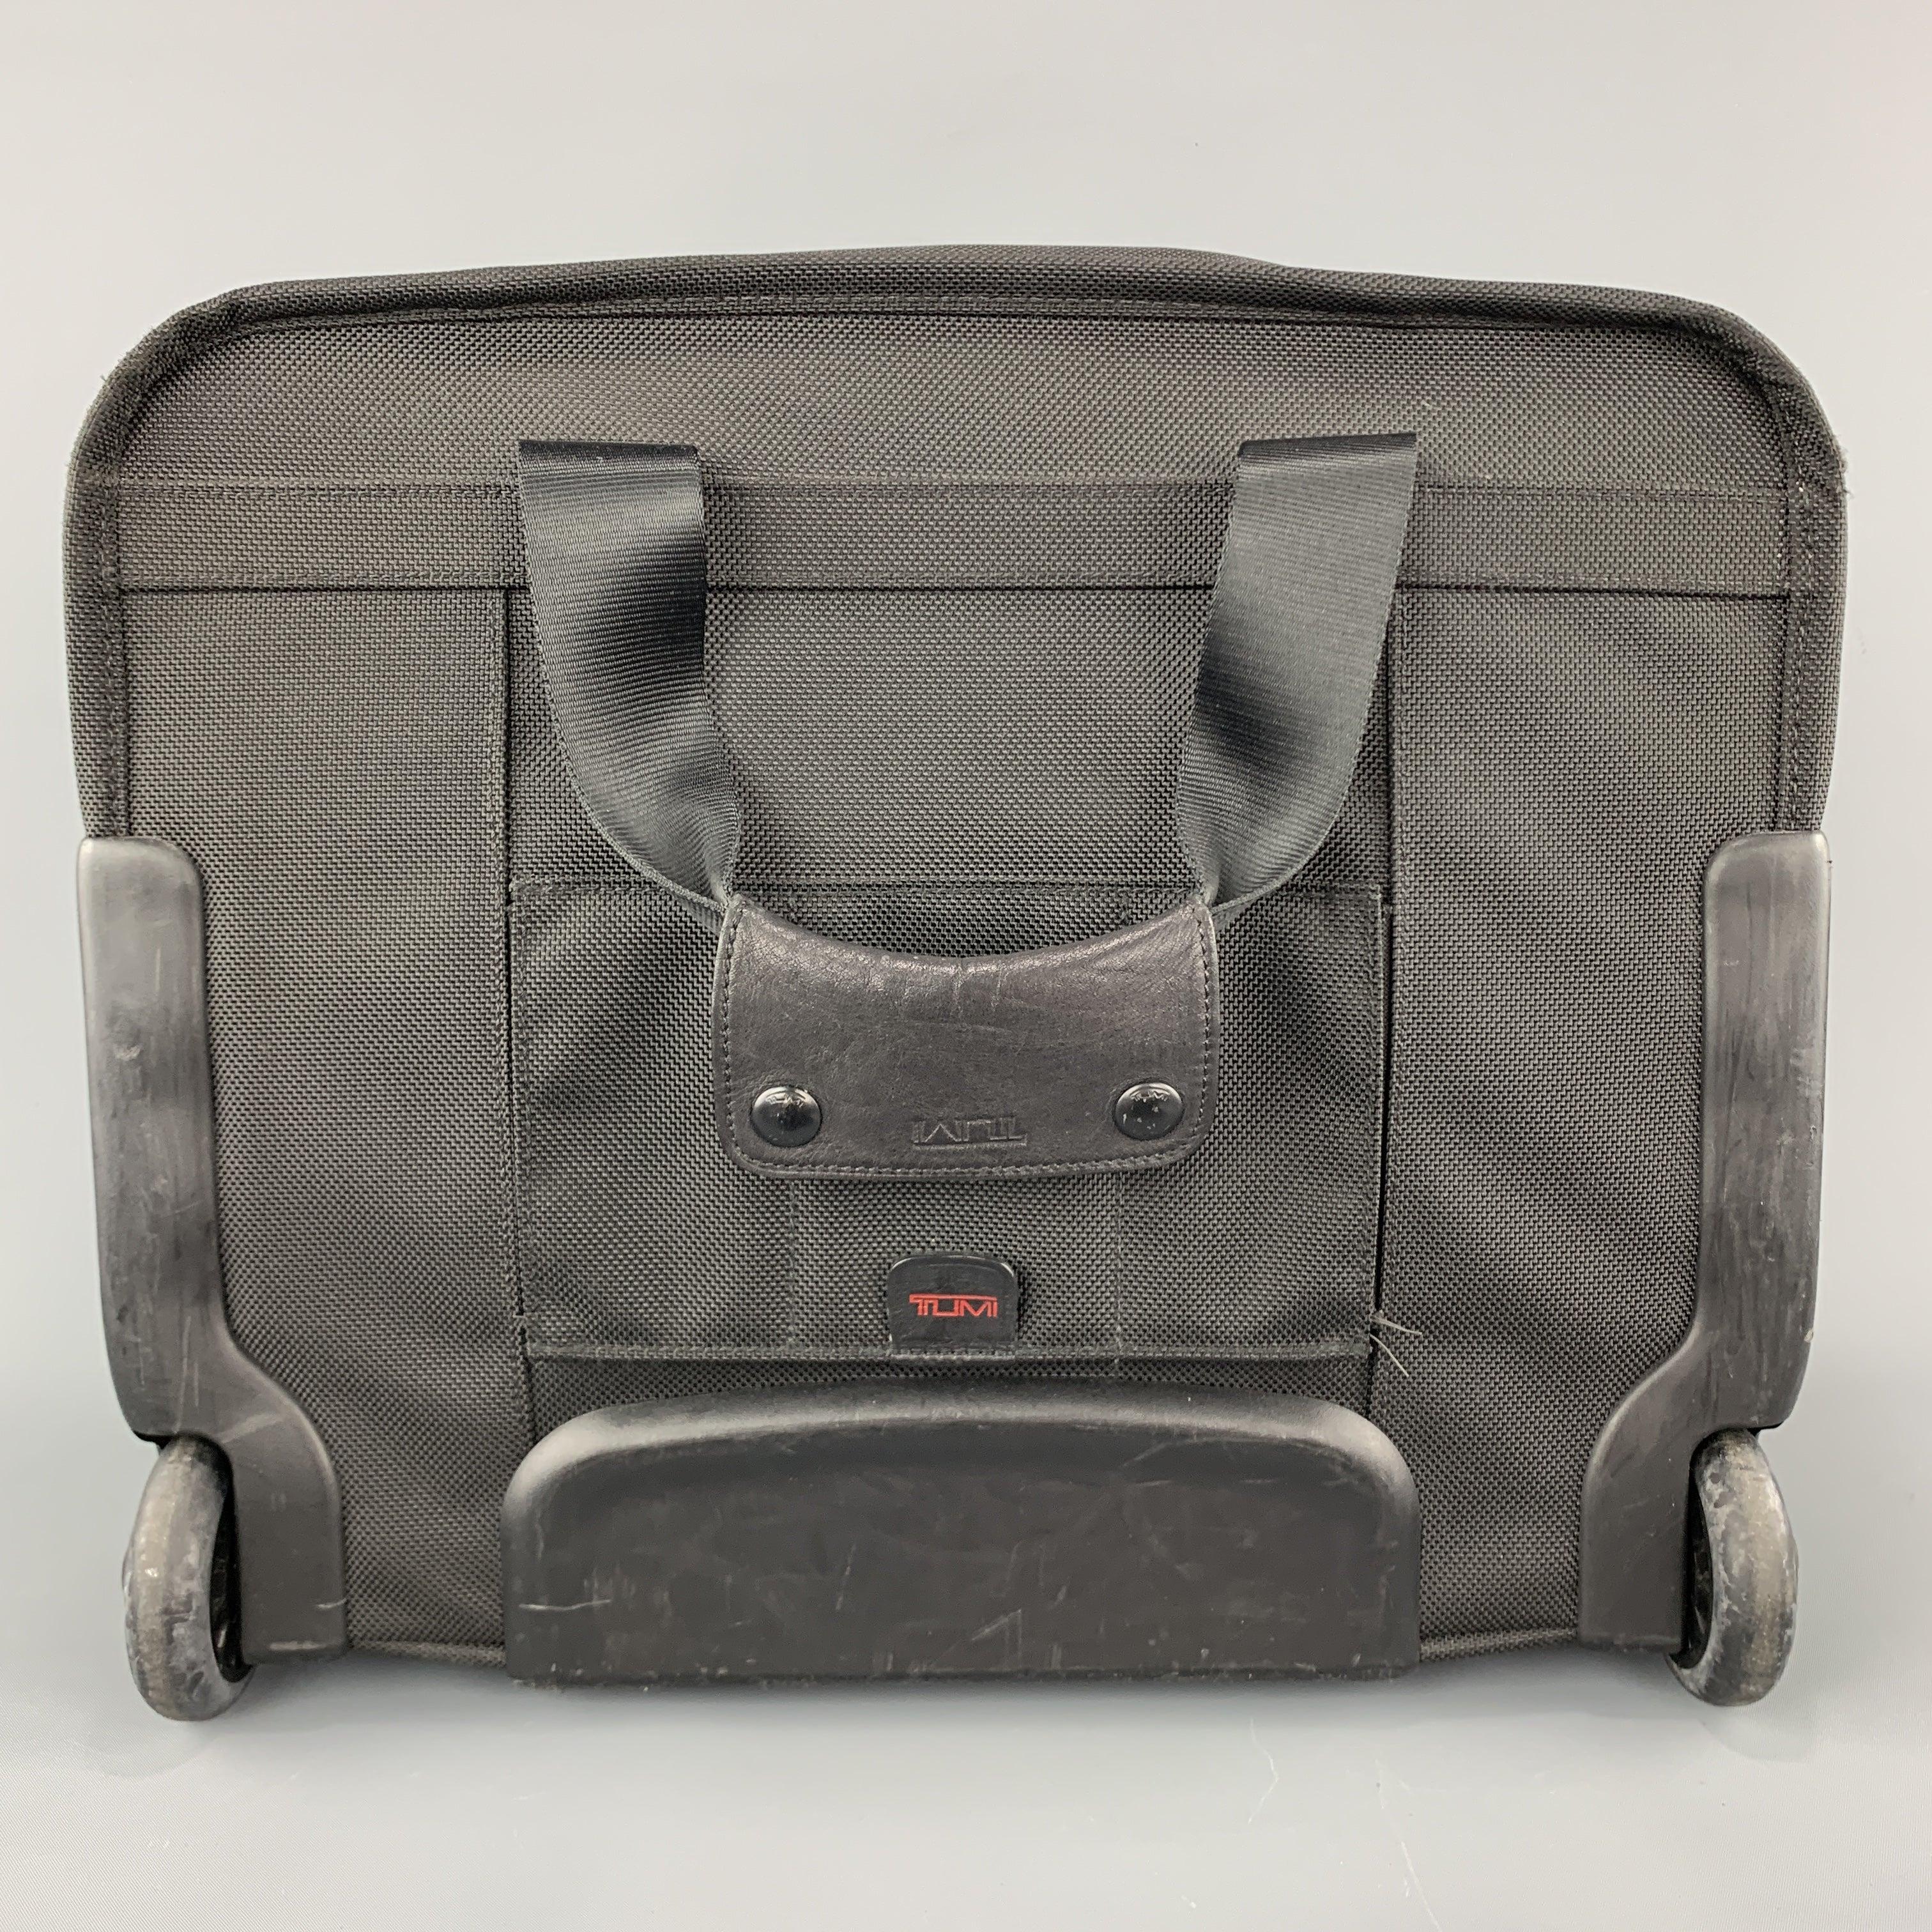 TUMI Black Nylon Canvas Roller Suitcase For Sale 2